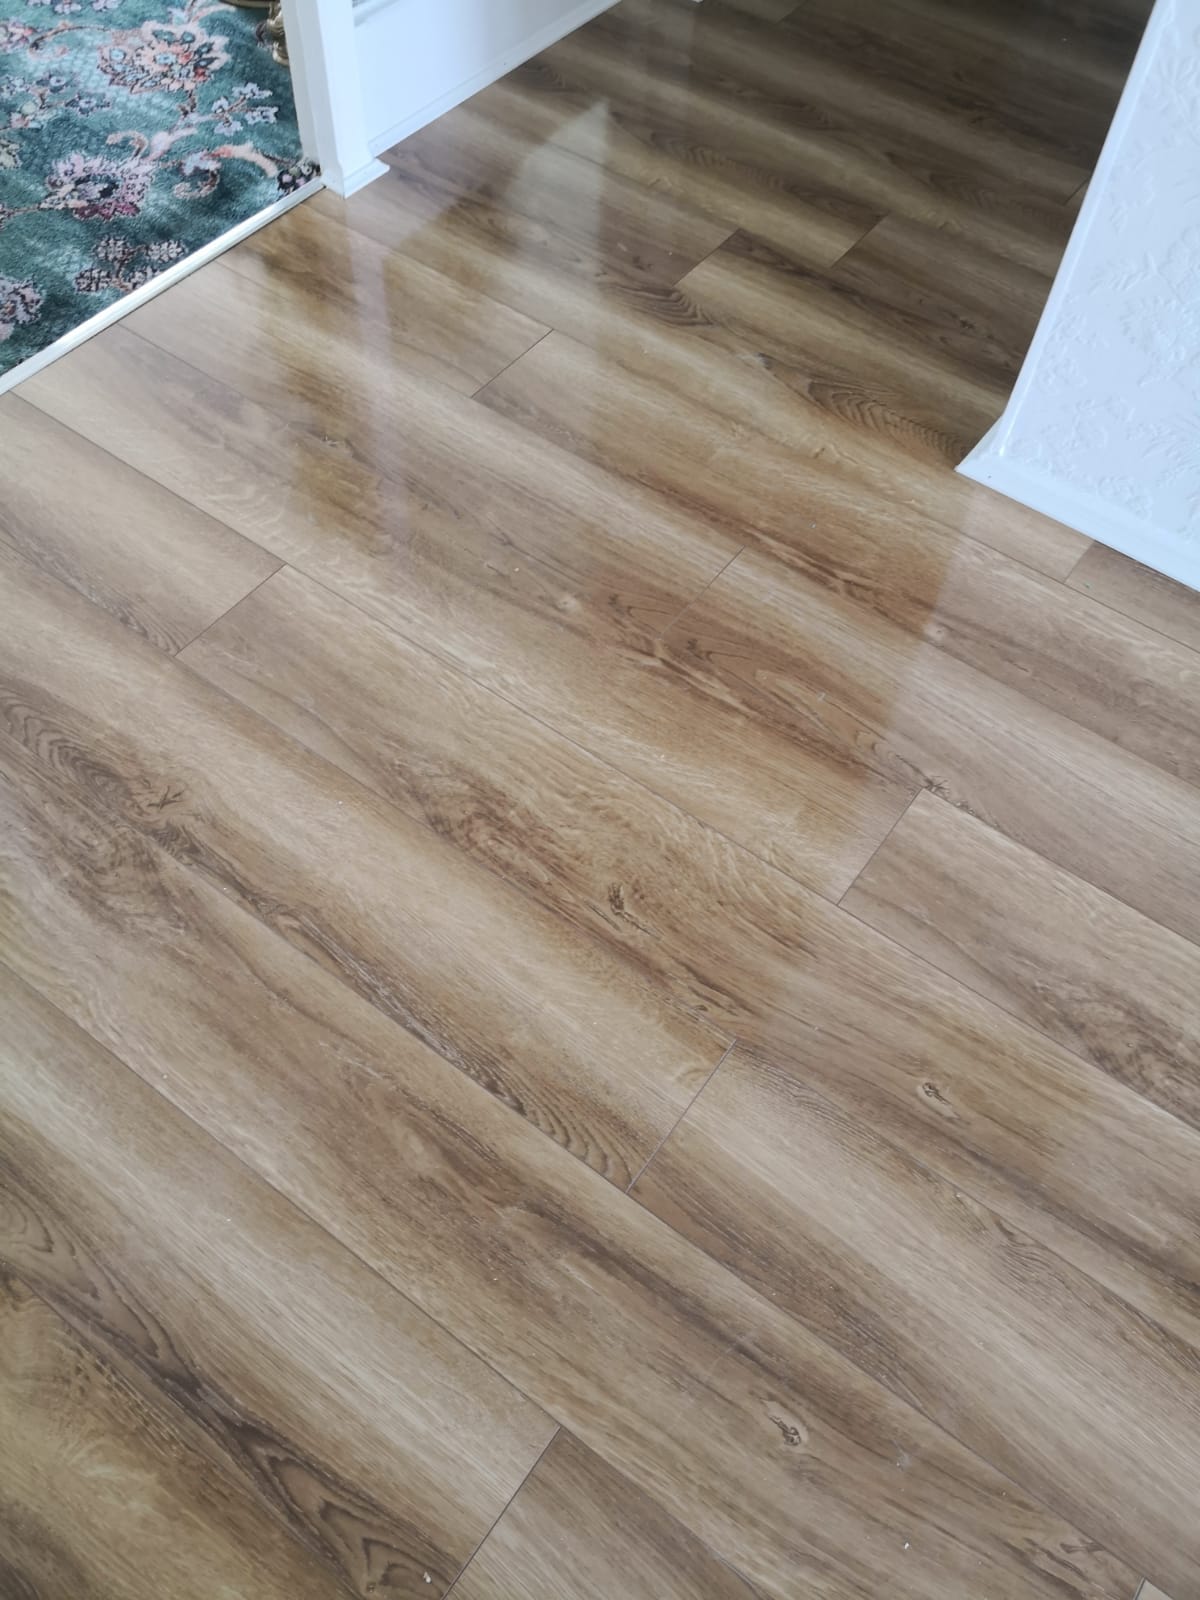 Canadia Prestige Rustic Oak Gloss Laminate Flooring - The Carpet Shop ...